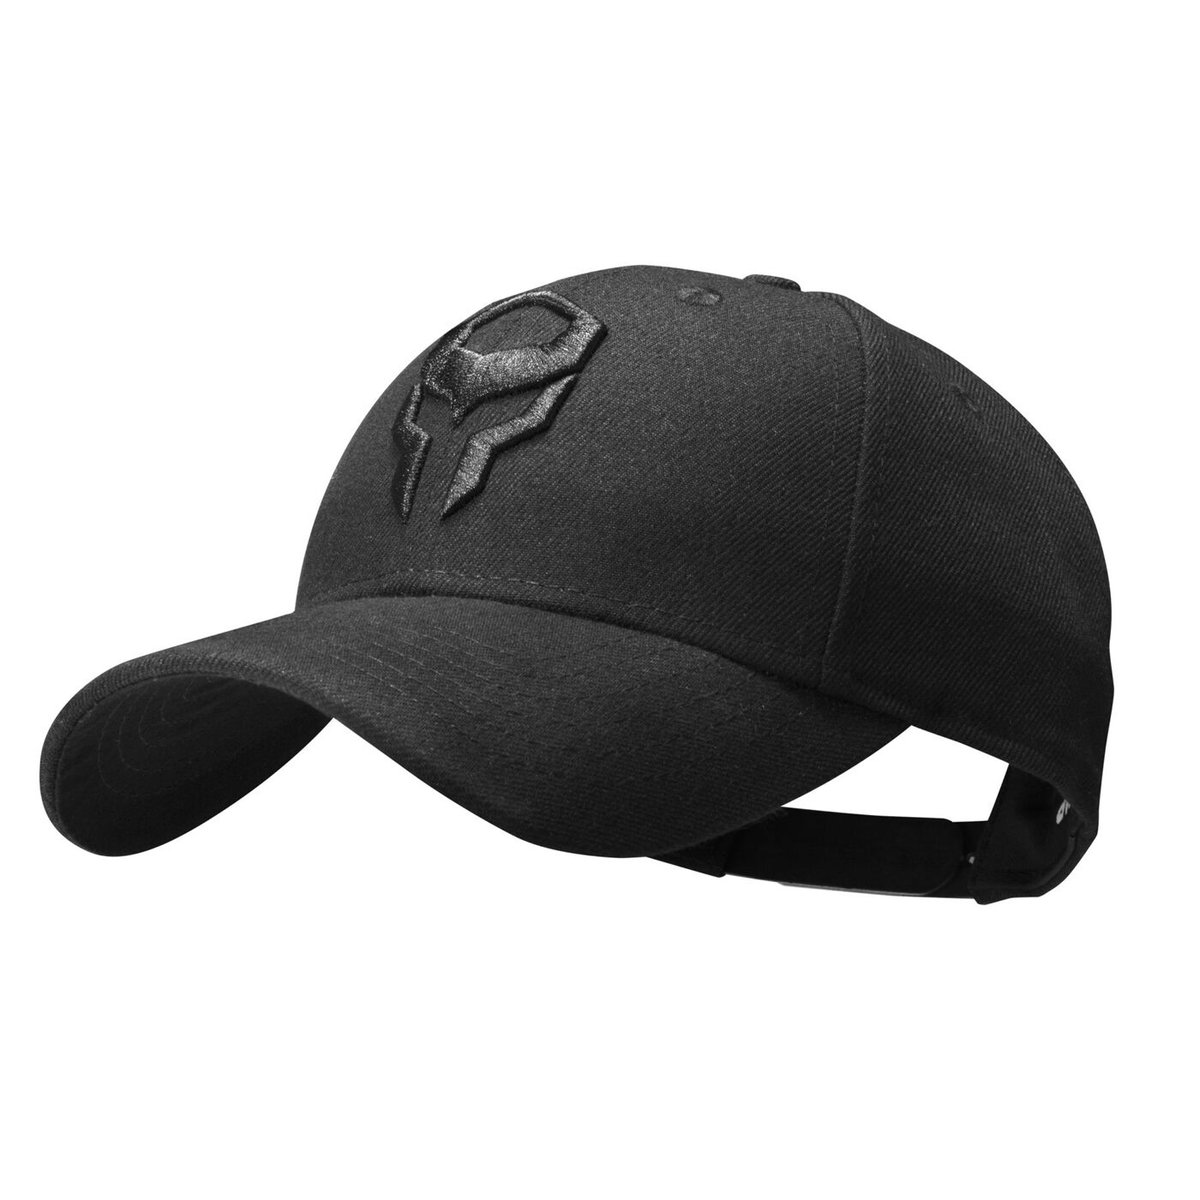 Tilta Baseball Cap - Black (TA-BC-B) ベースボールキャップ